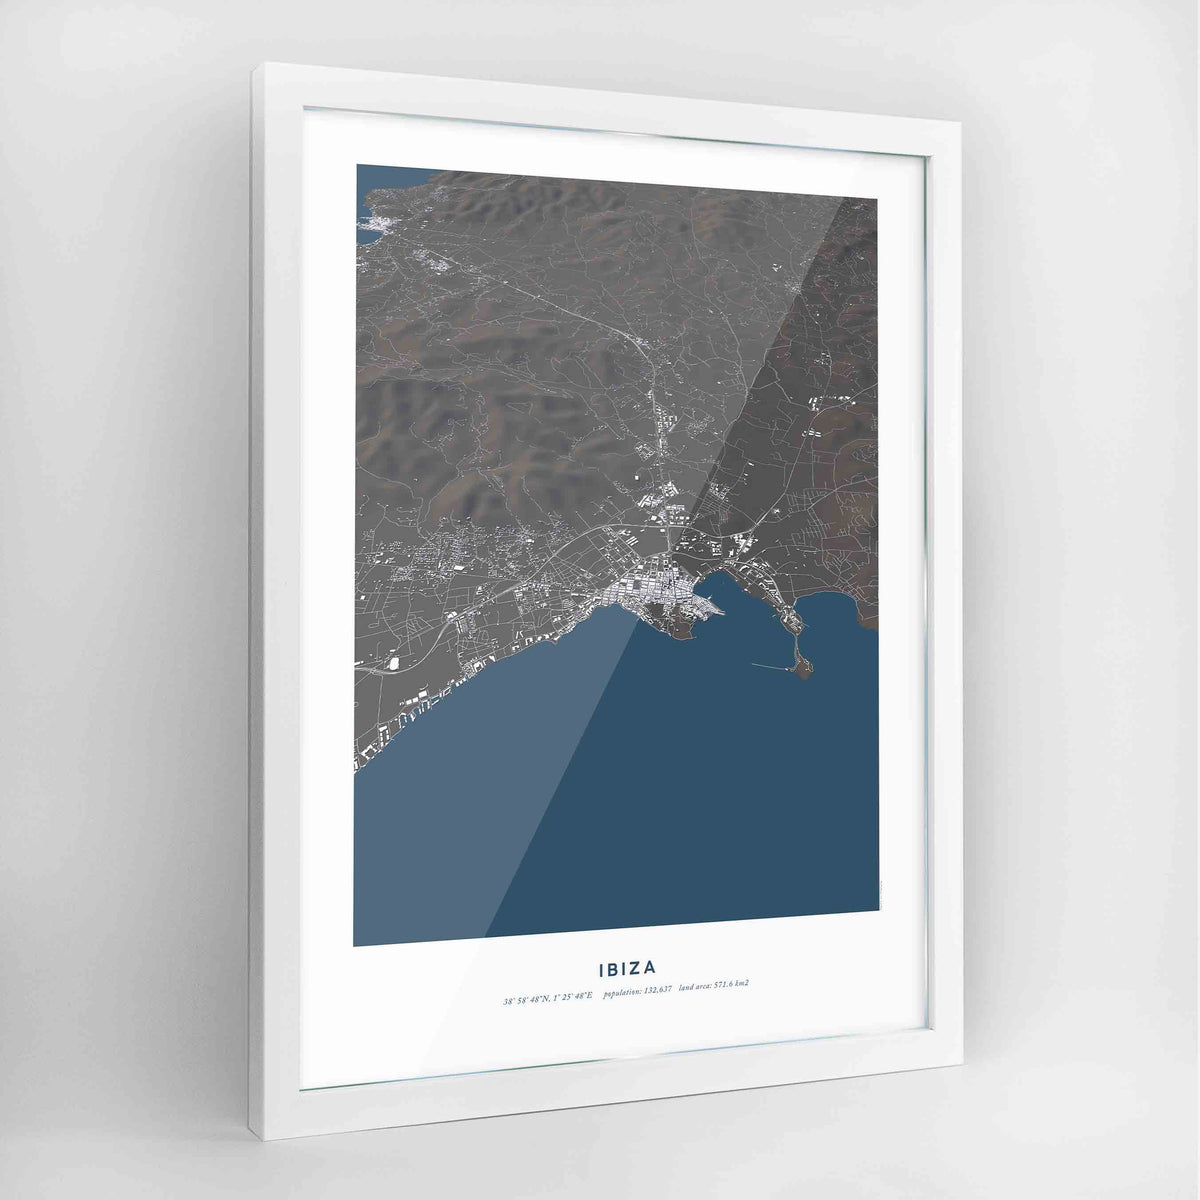 Ibiza 3D City Model - Framed